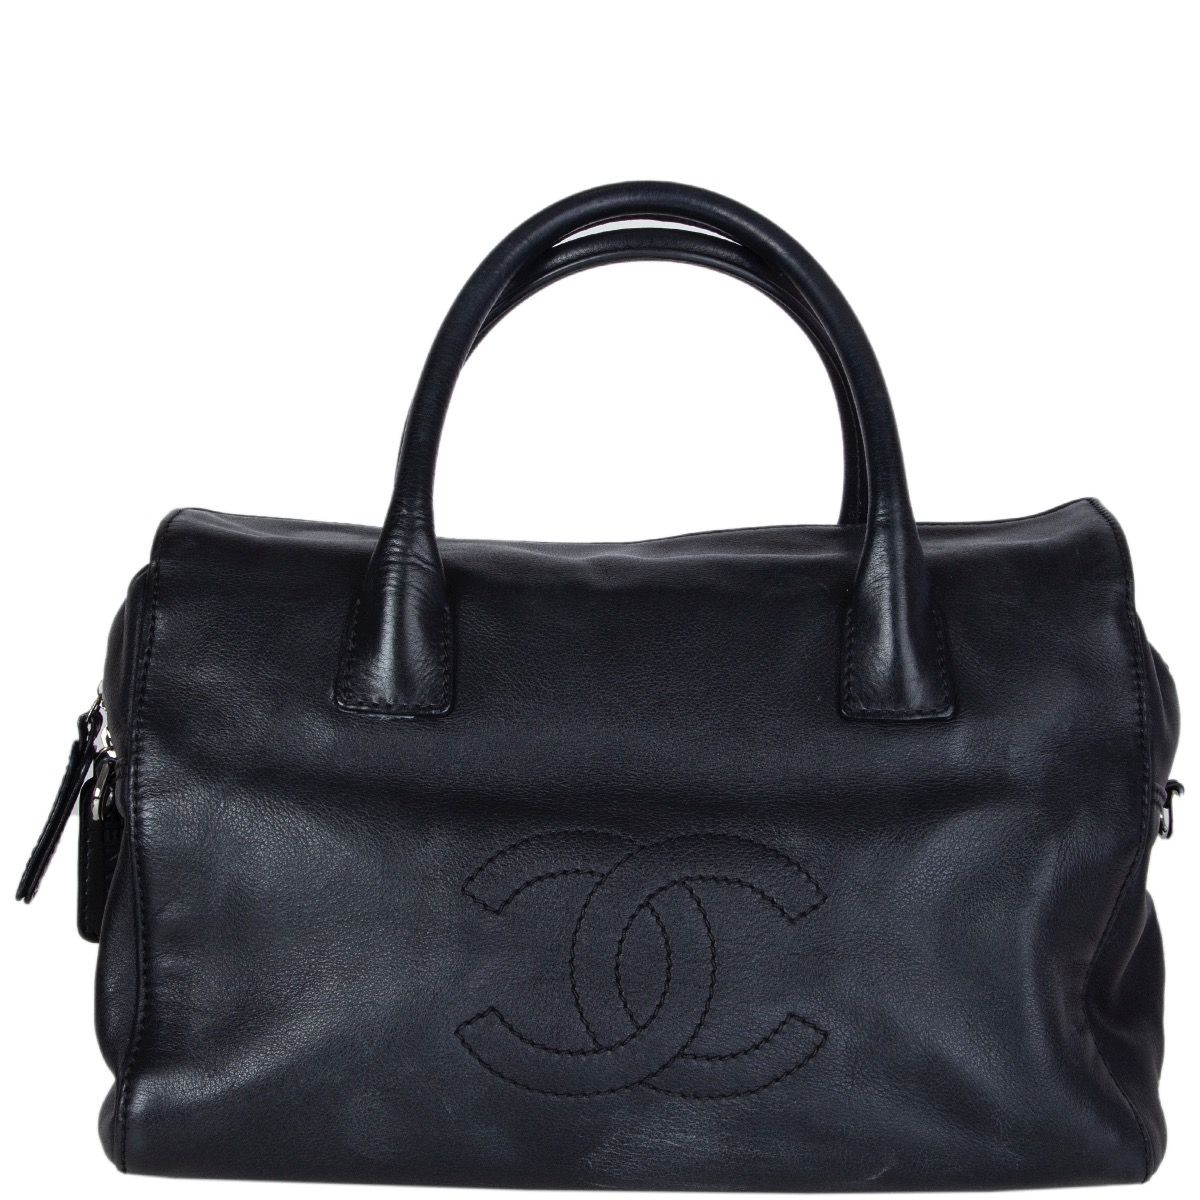 Chanel Classic Medium 'CC' Embroidery Handbag